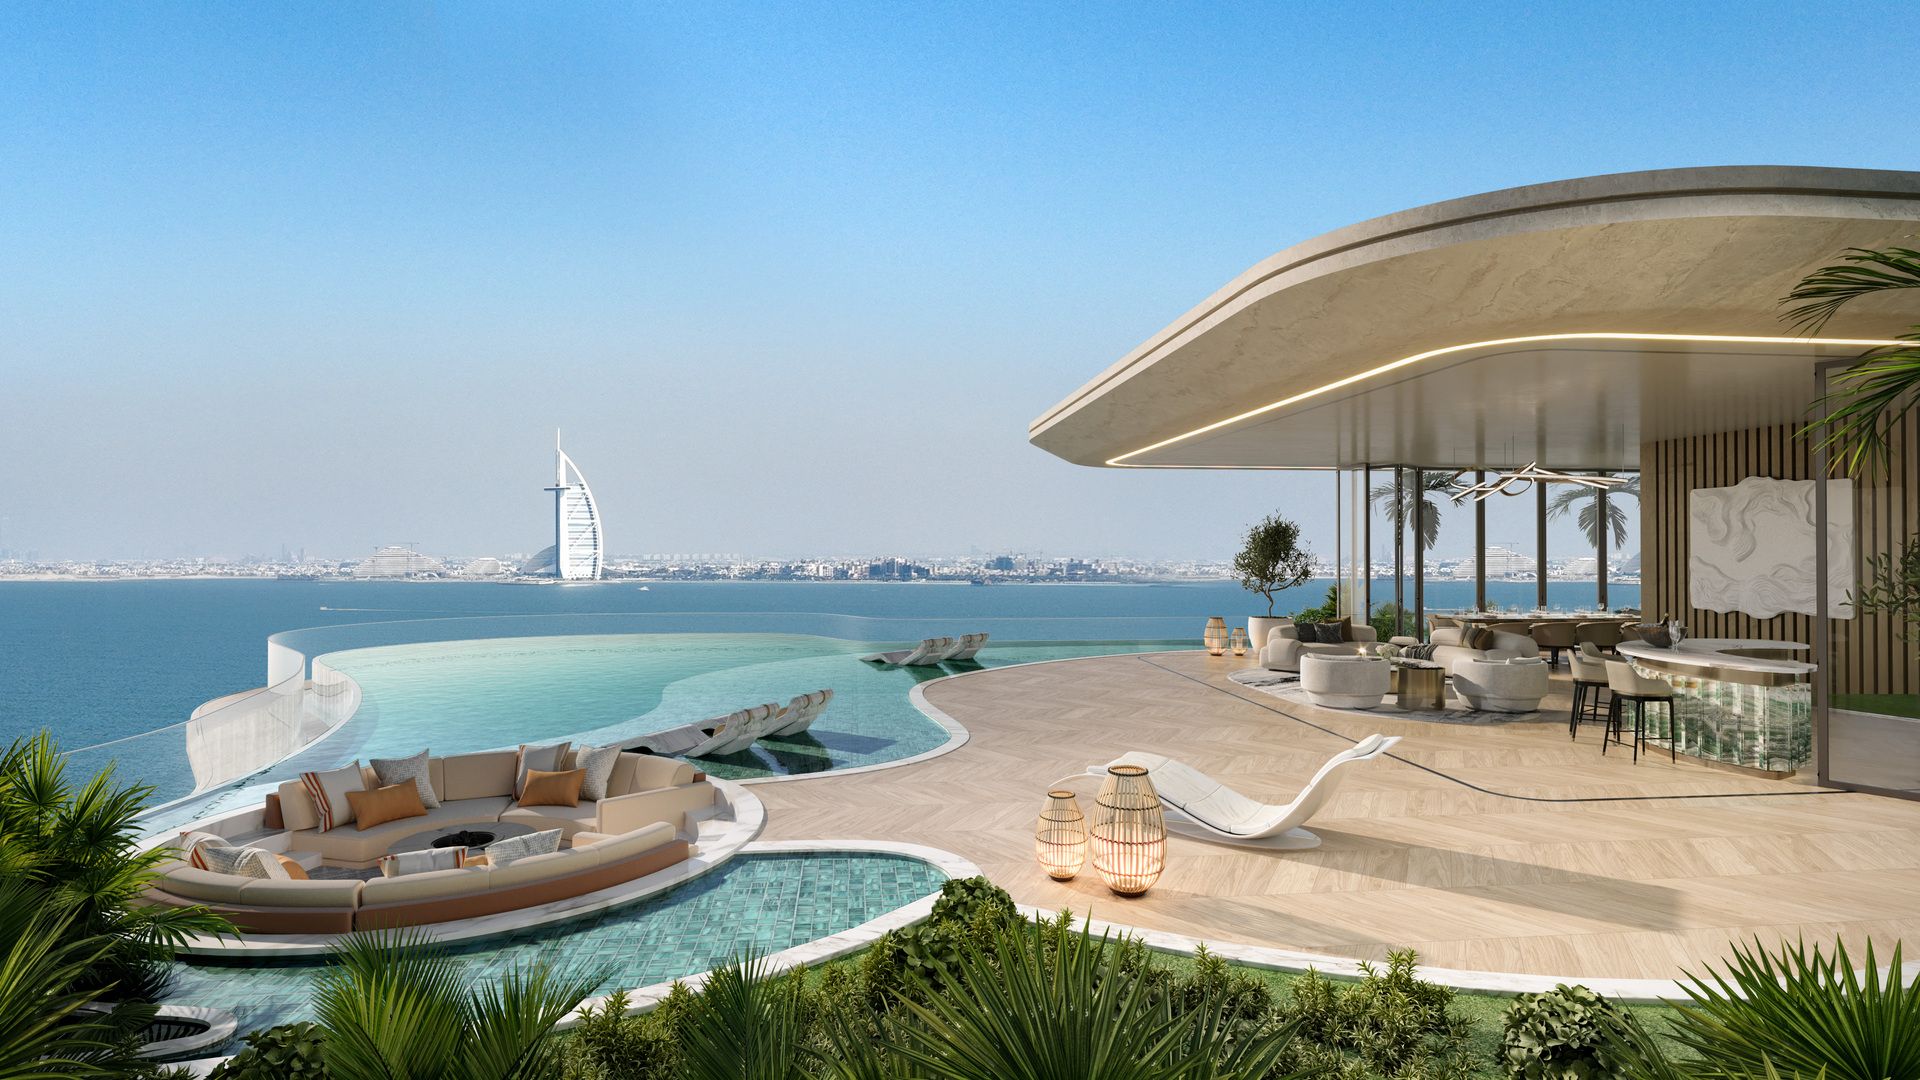 Vendita Attico Dubai | Skyline Palm Jumeirah | luxforsale.it